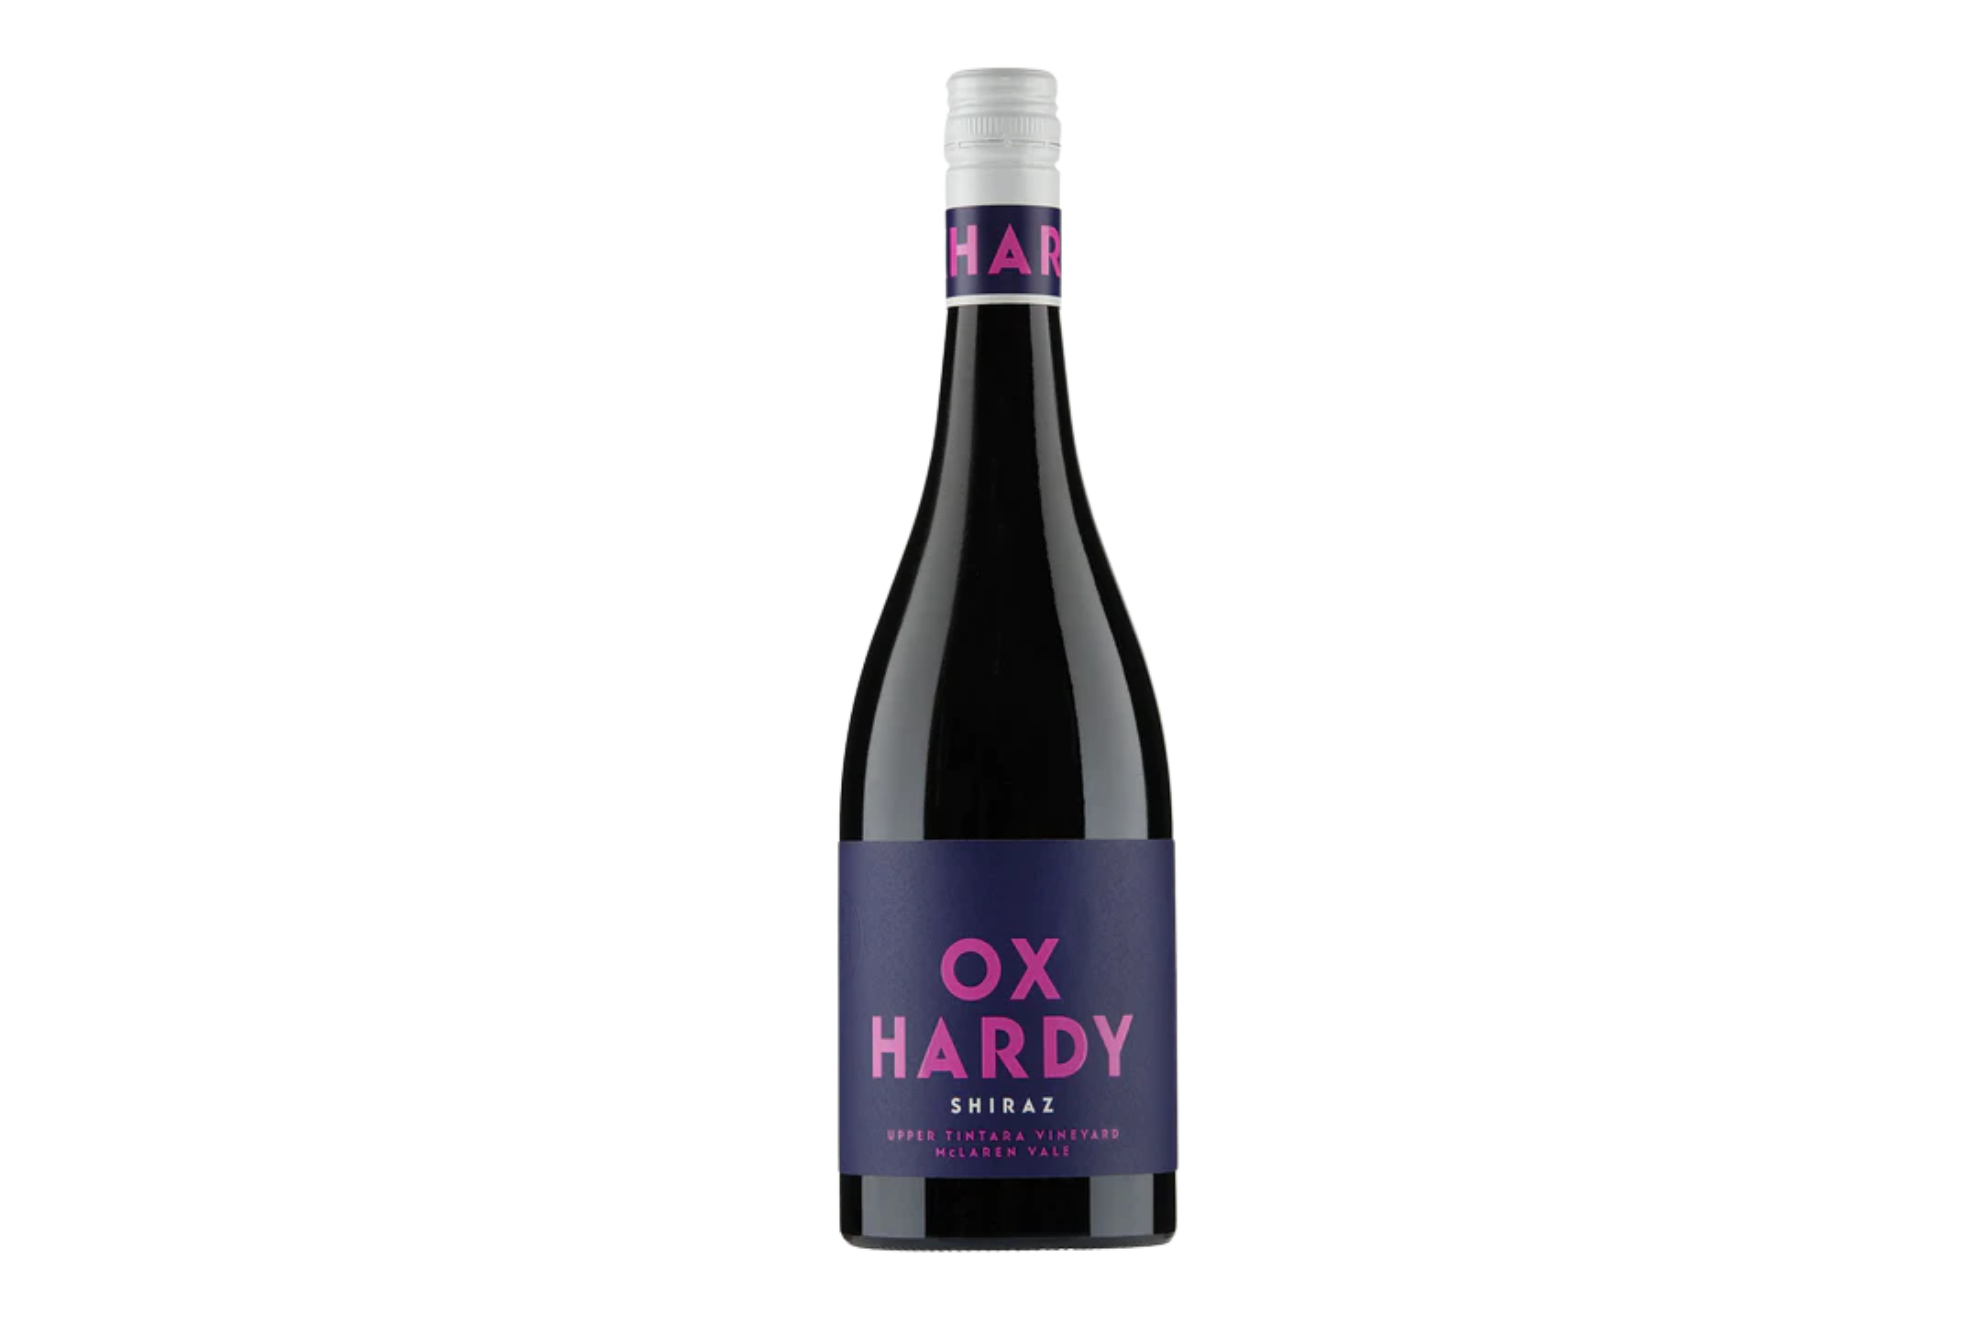 Ox Hardy Upper Tintara Vineyard Shiraz 2017